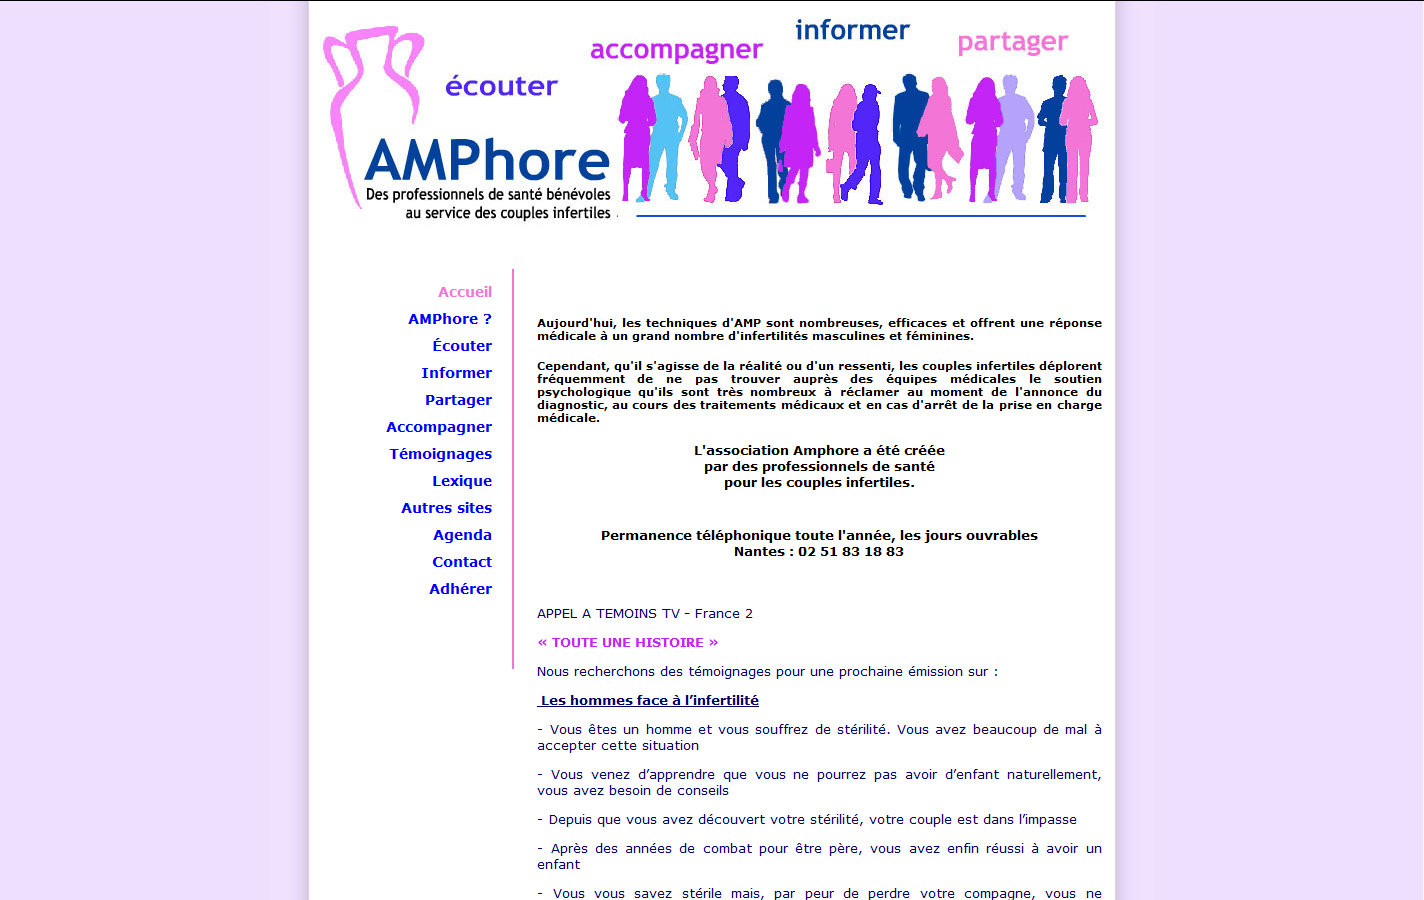 AMPhore